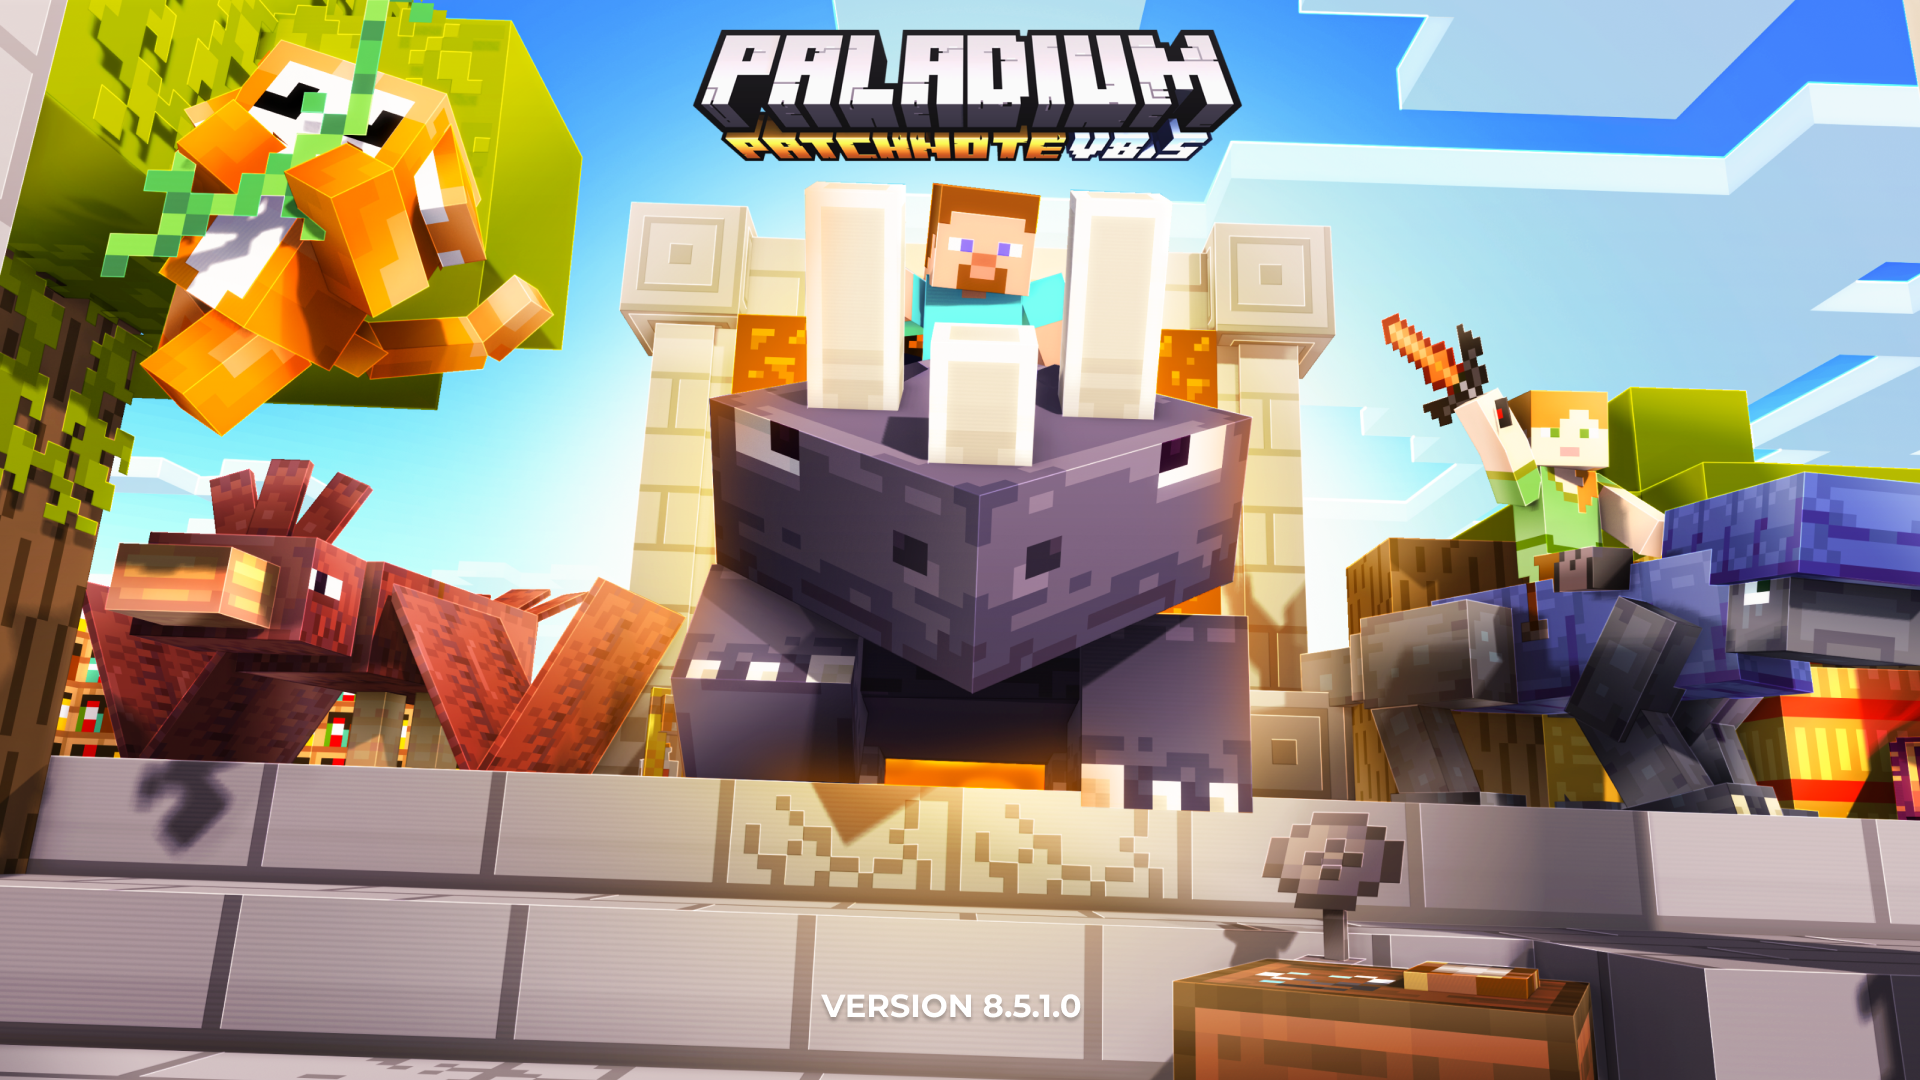 Paladium - PatchNote V8.5.1.0 | 05/02/2022